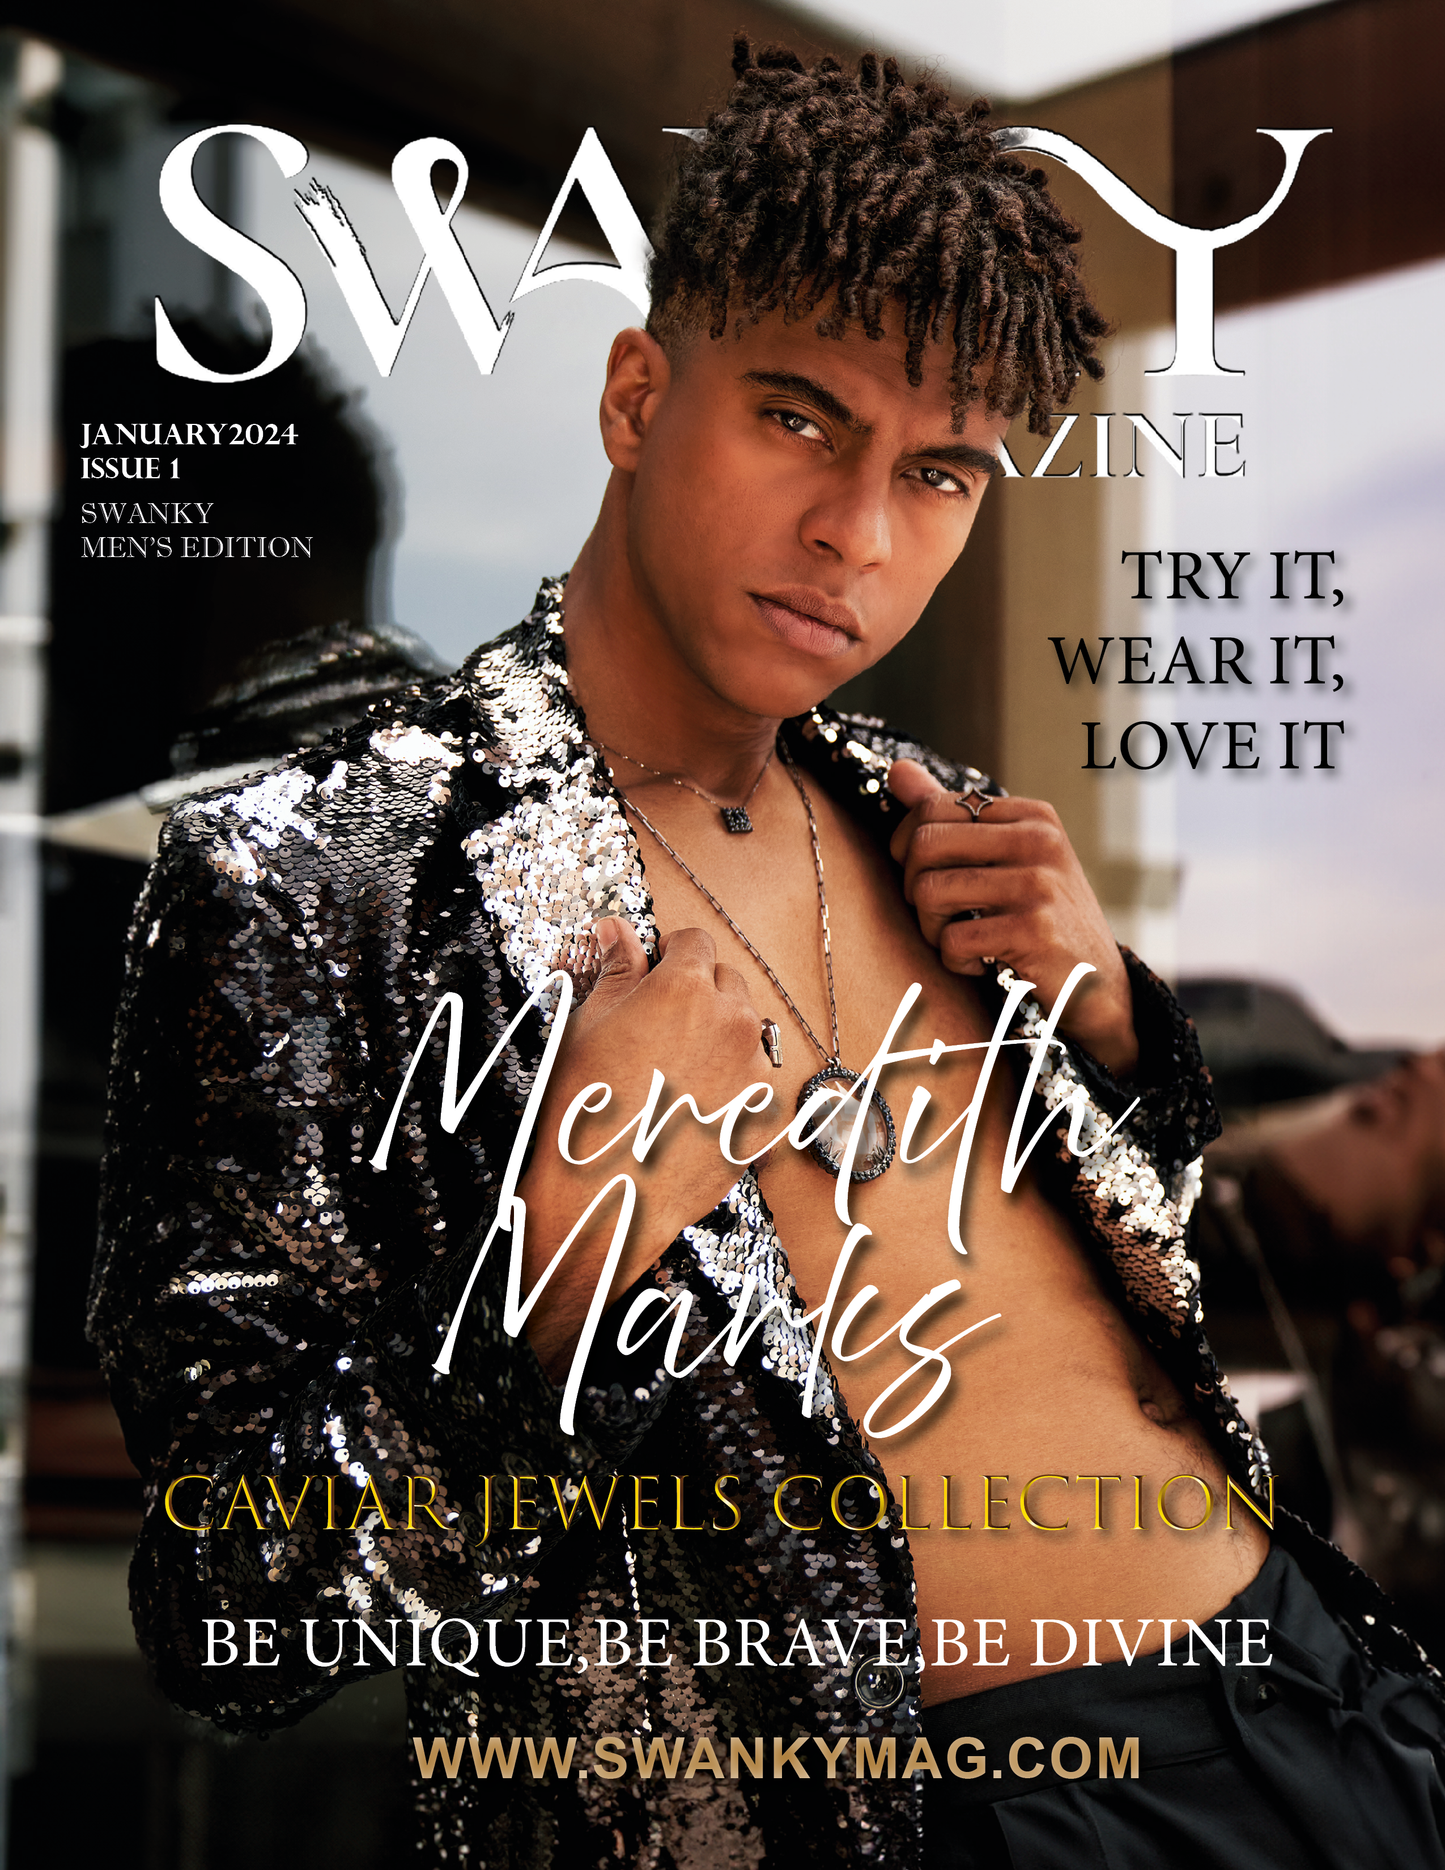 Swanky Mens Magazine - January 2024: The Mens Edition Issue I